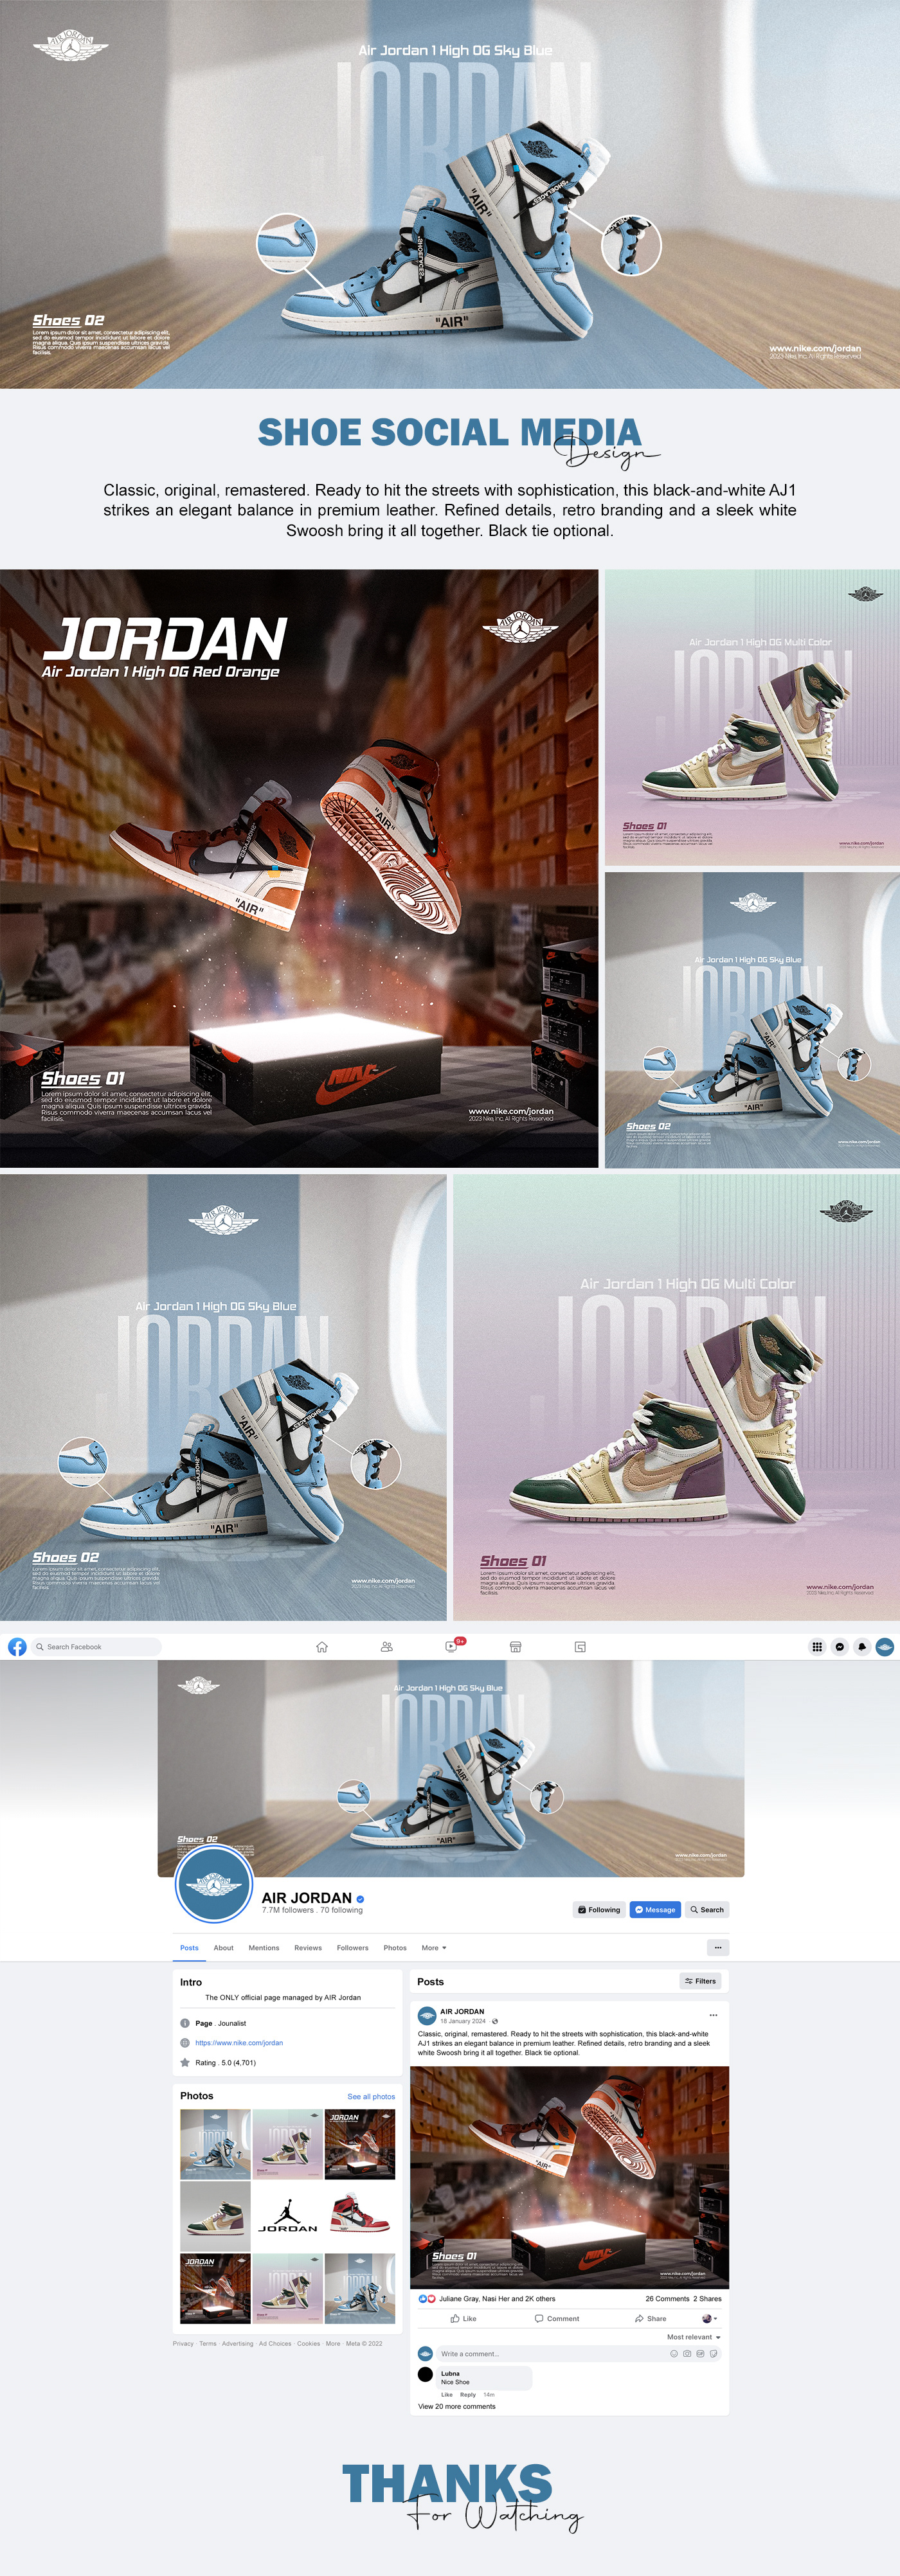 shoe social media Social Media Design shoes design manipulation design social media manipulation shoes sneakers air jordan post design JORDAN SHOES DESIGN Shoe Product